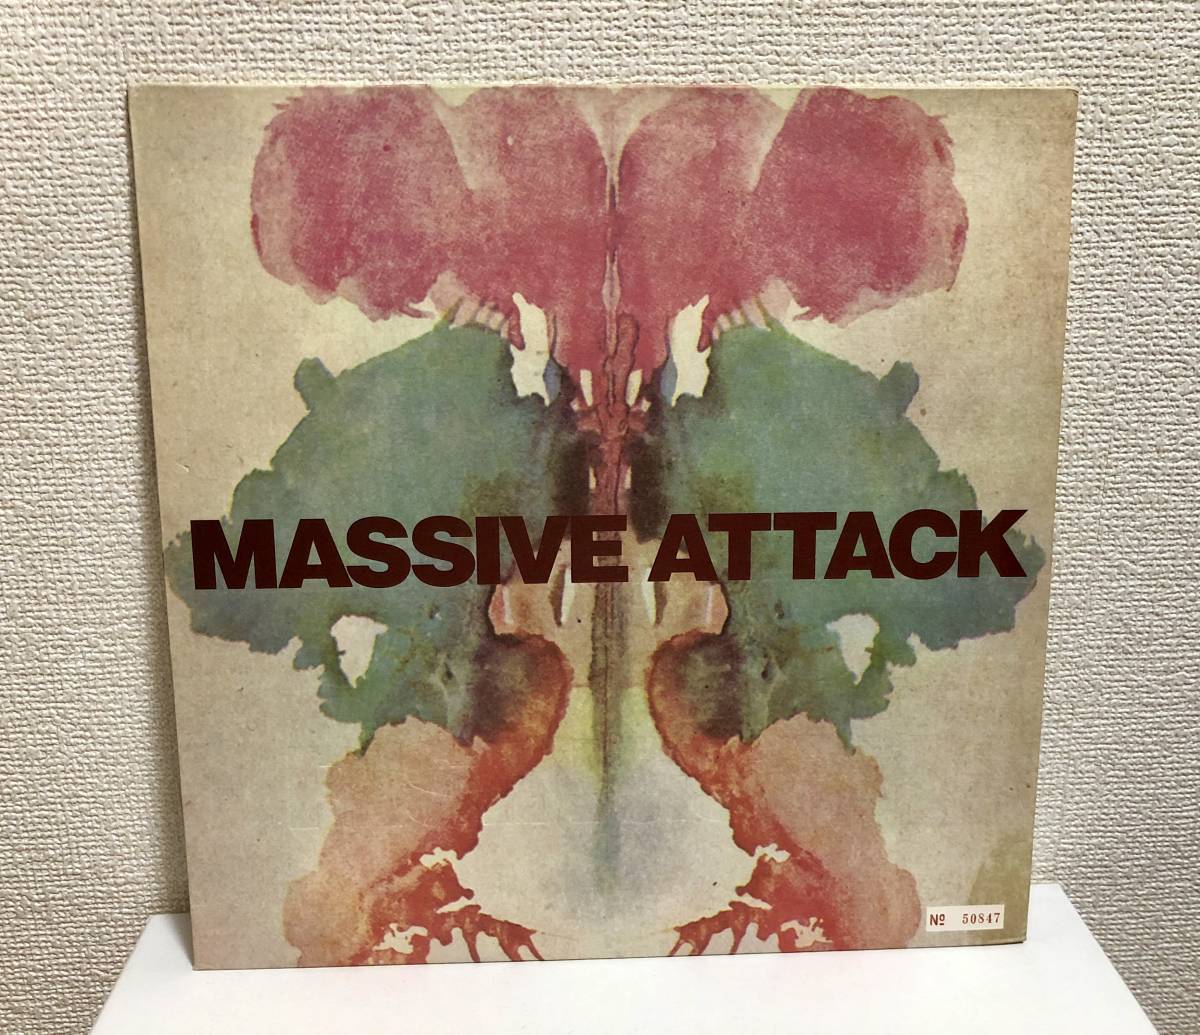  RISINGSON - MASSIVE ATTACK マッシブアタック 12インチ レコード 中古 状態良好 送料無料 